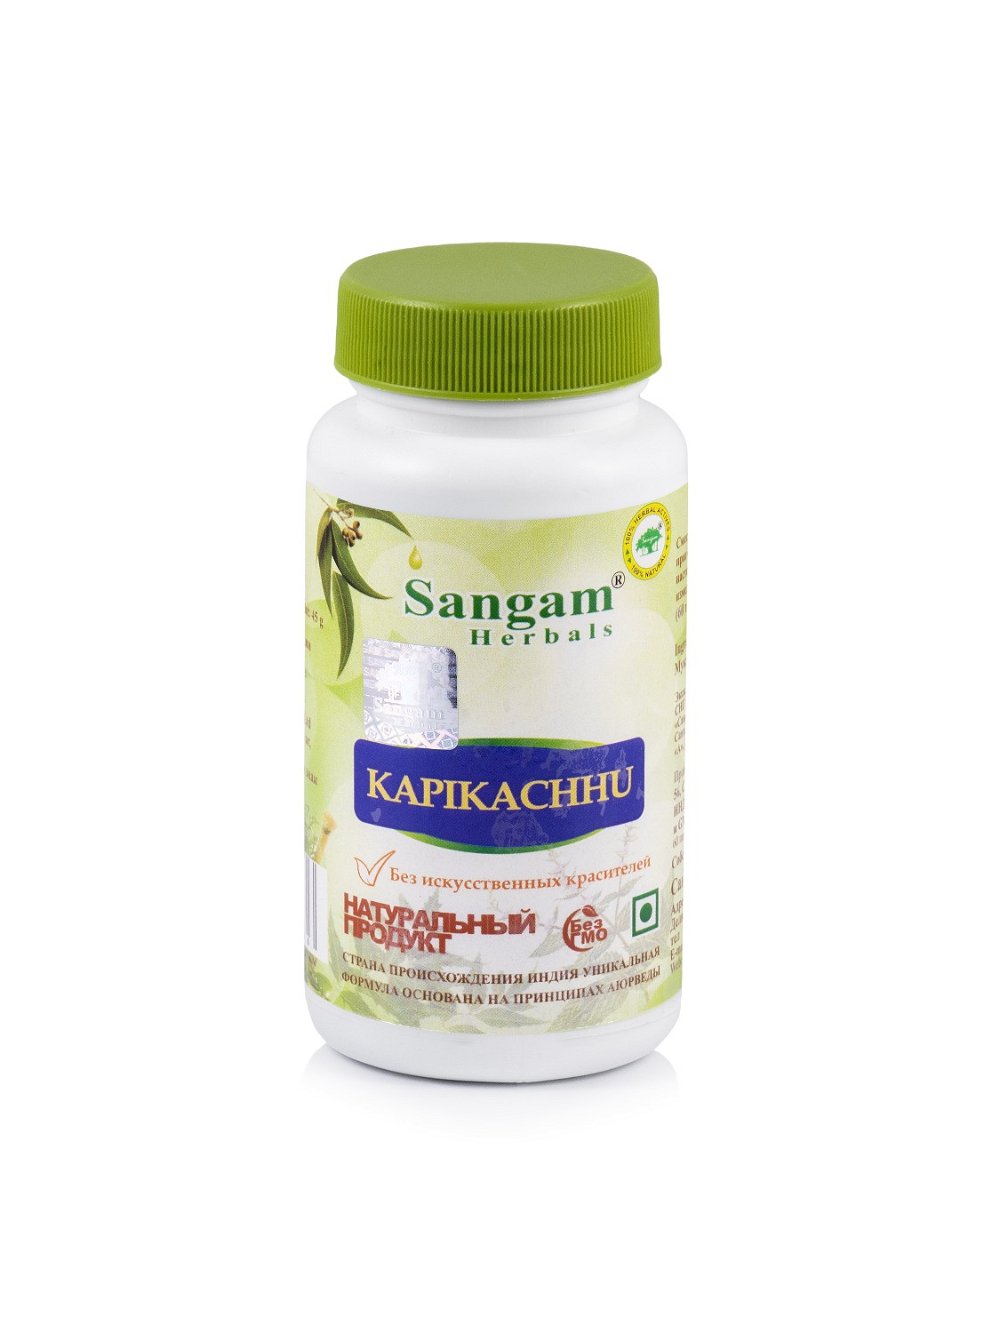 Капикачху Sangam Herbals (60 таблеток), 